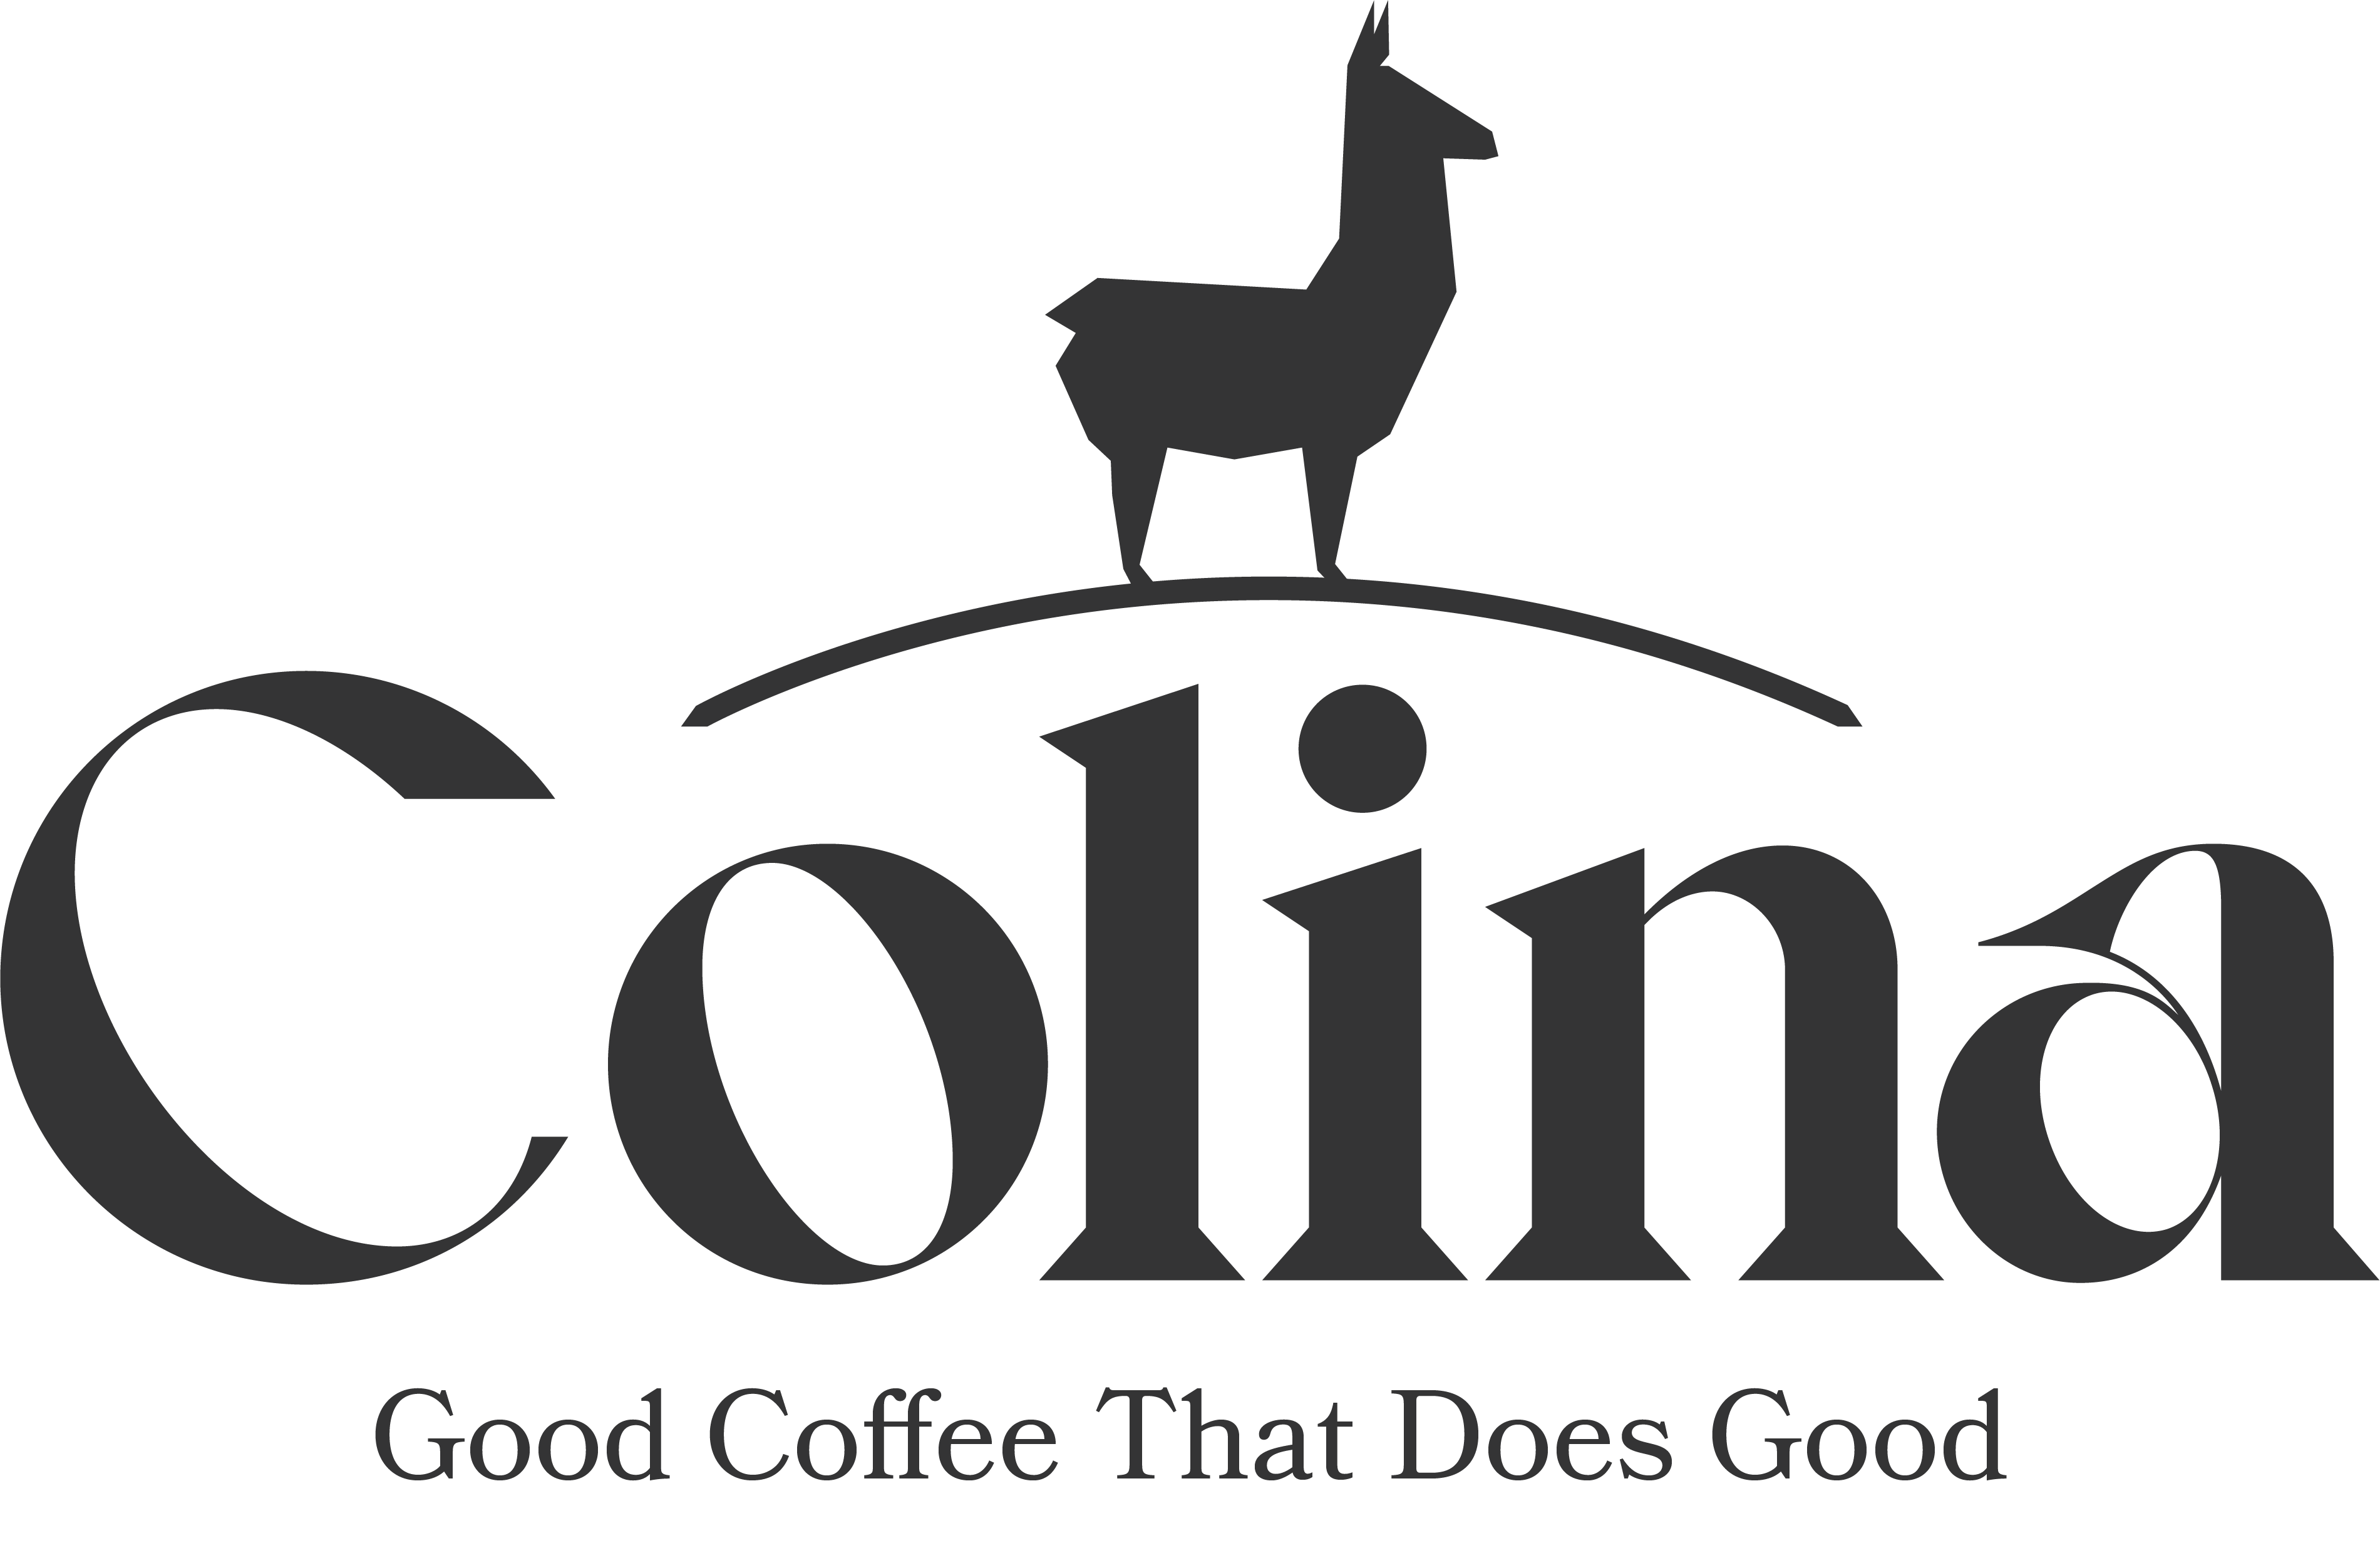 Colina Coffee